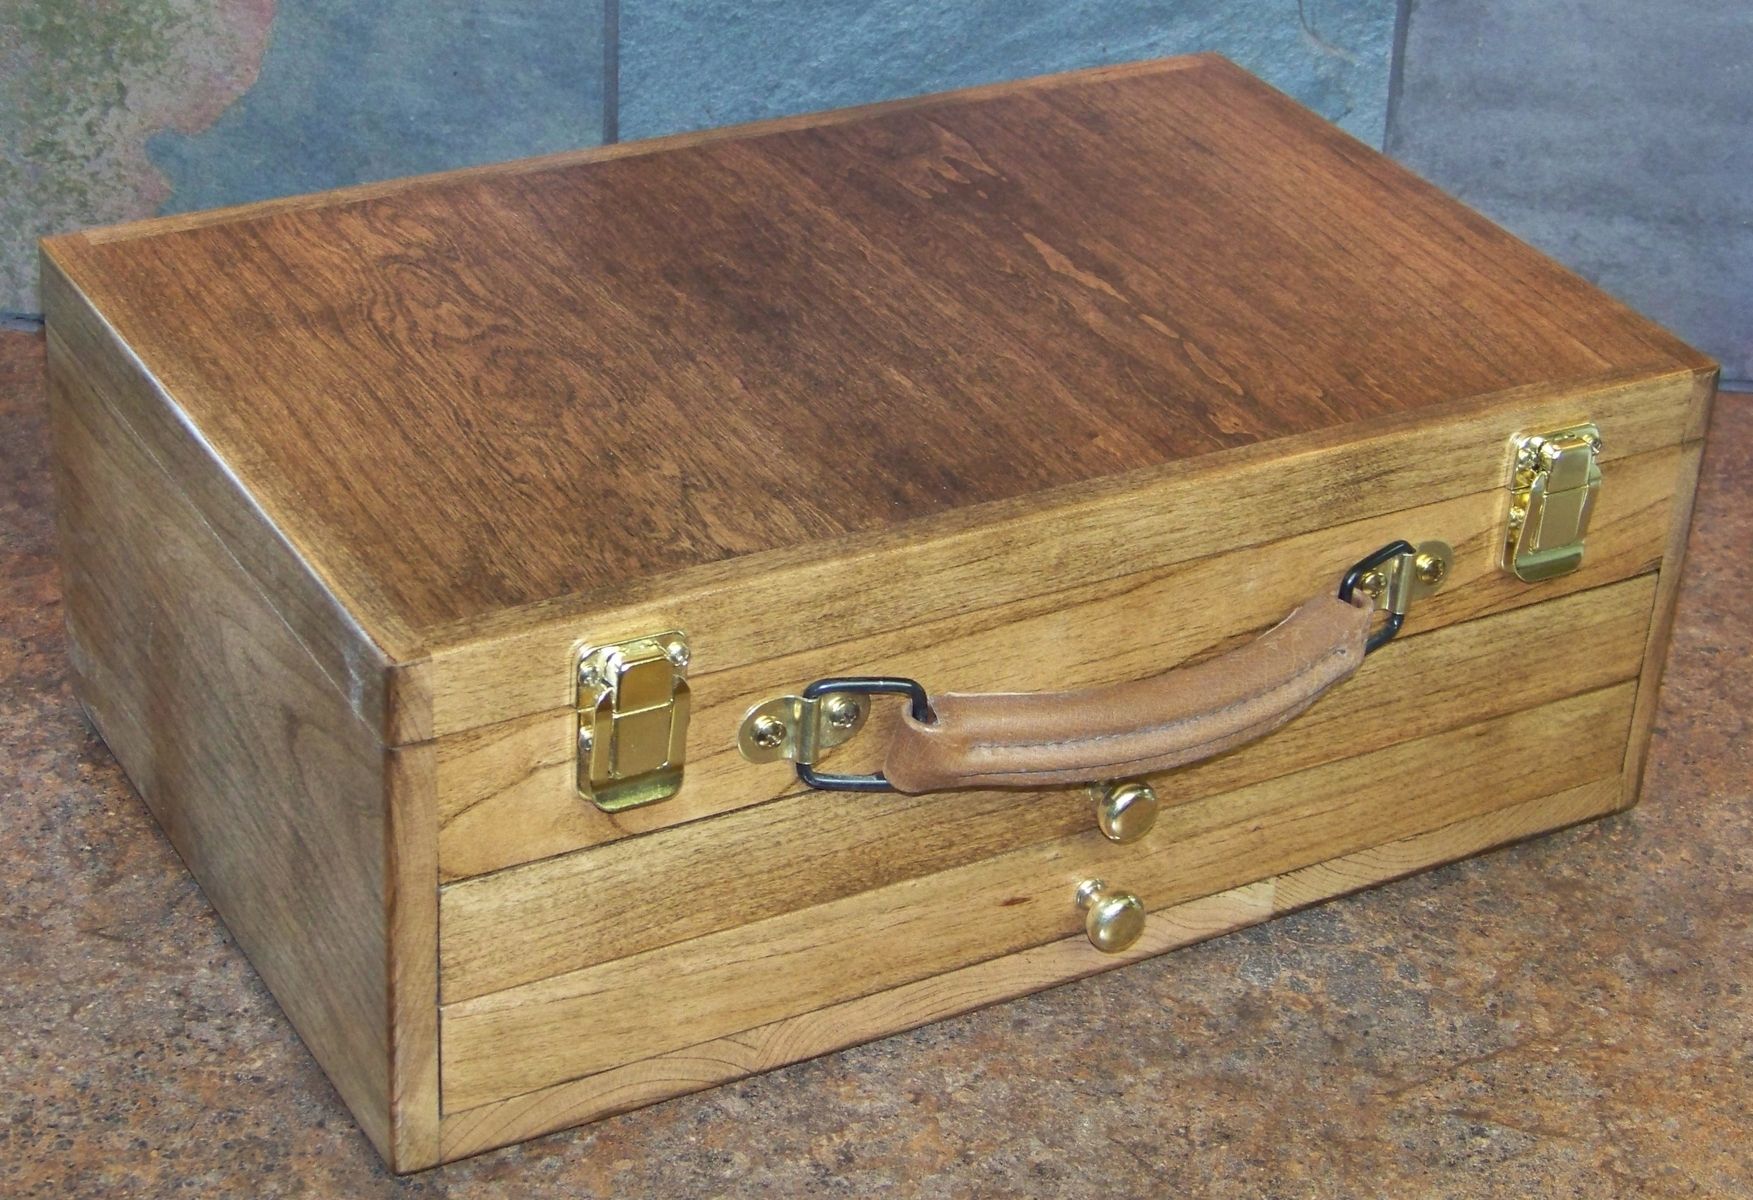 Custom Made Wooden Art Box by Palmer Union Design